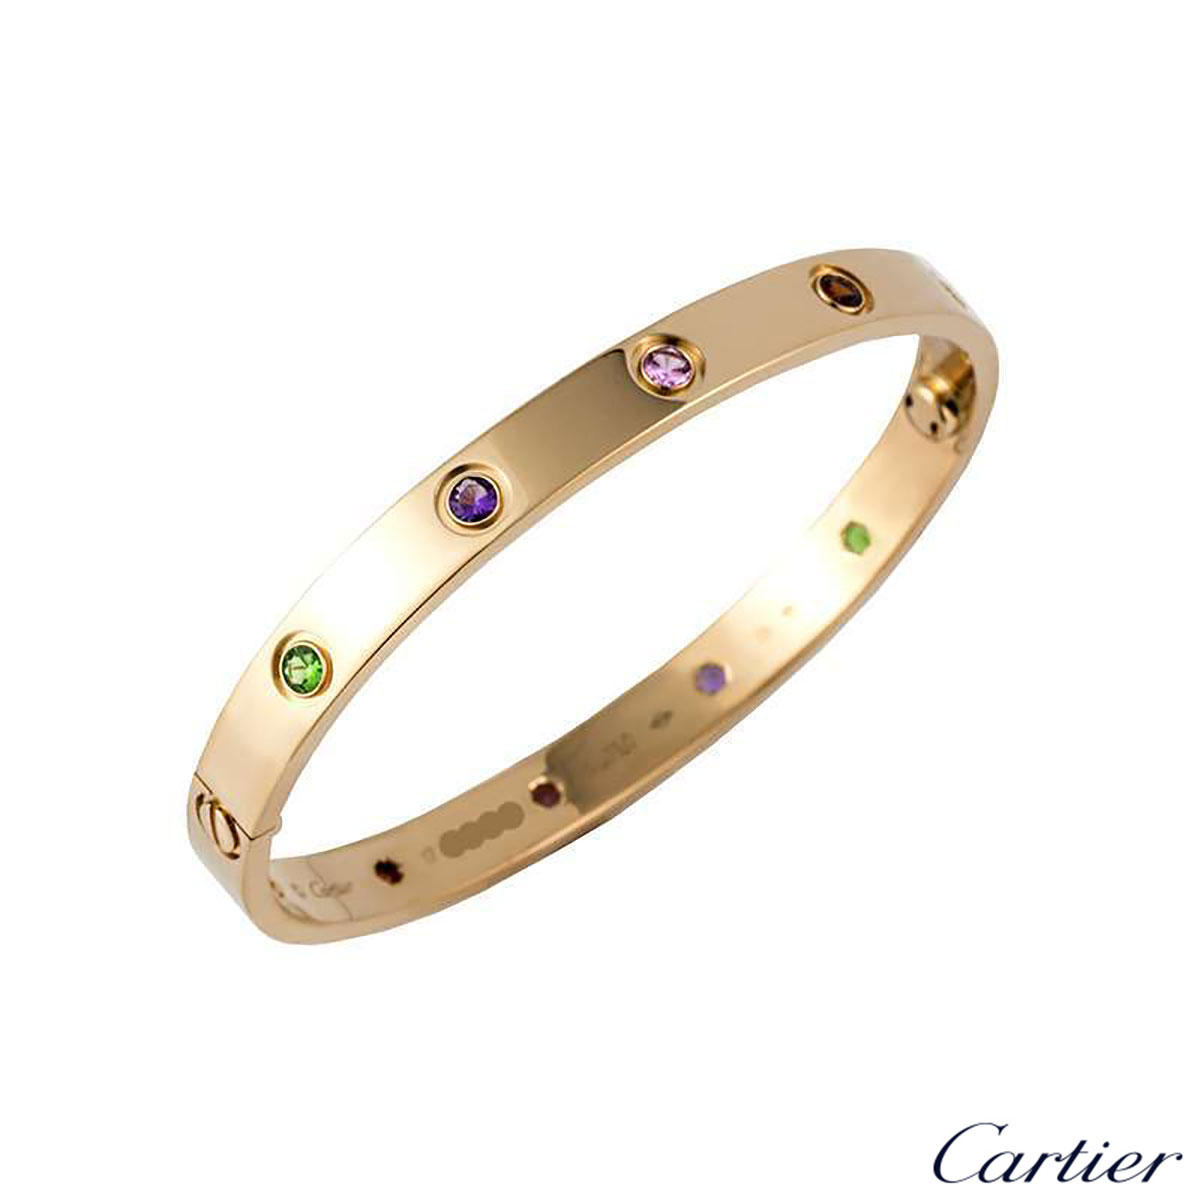 cartier love bracelet with stones